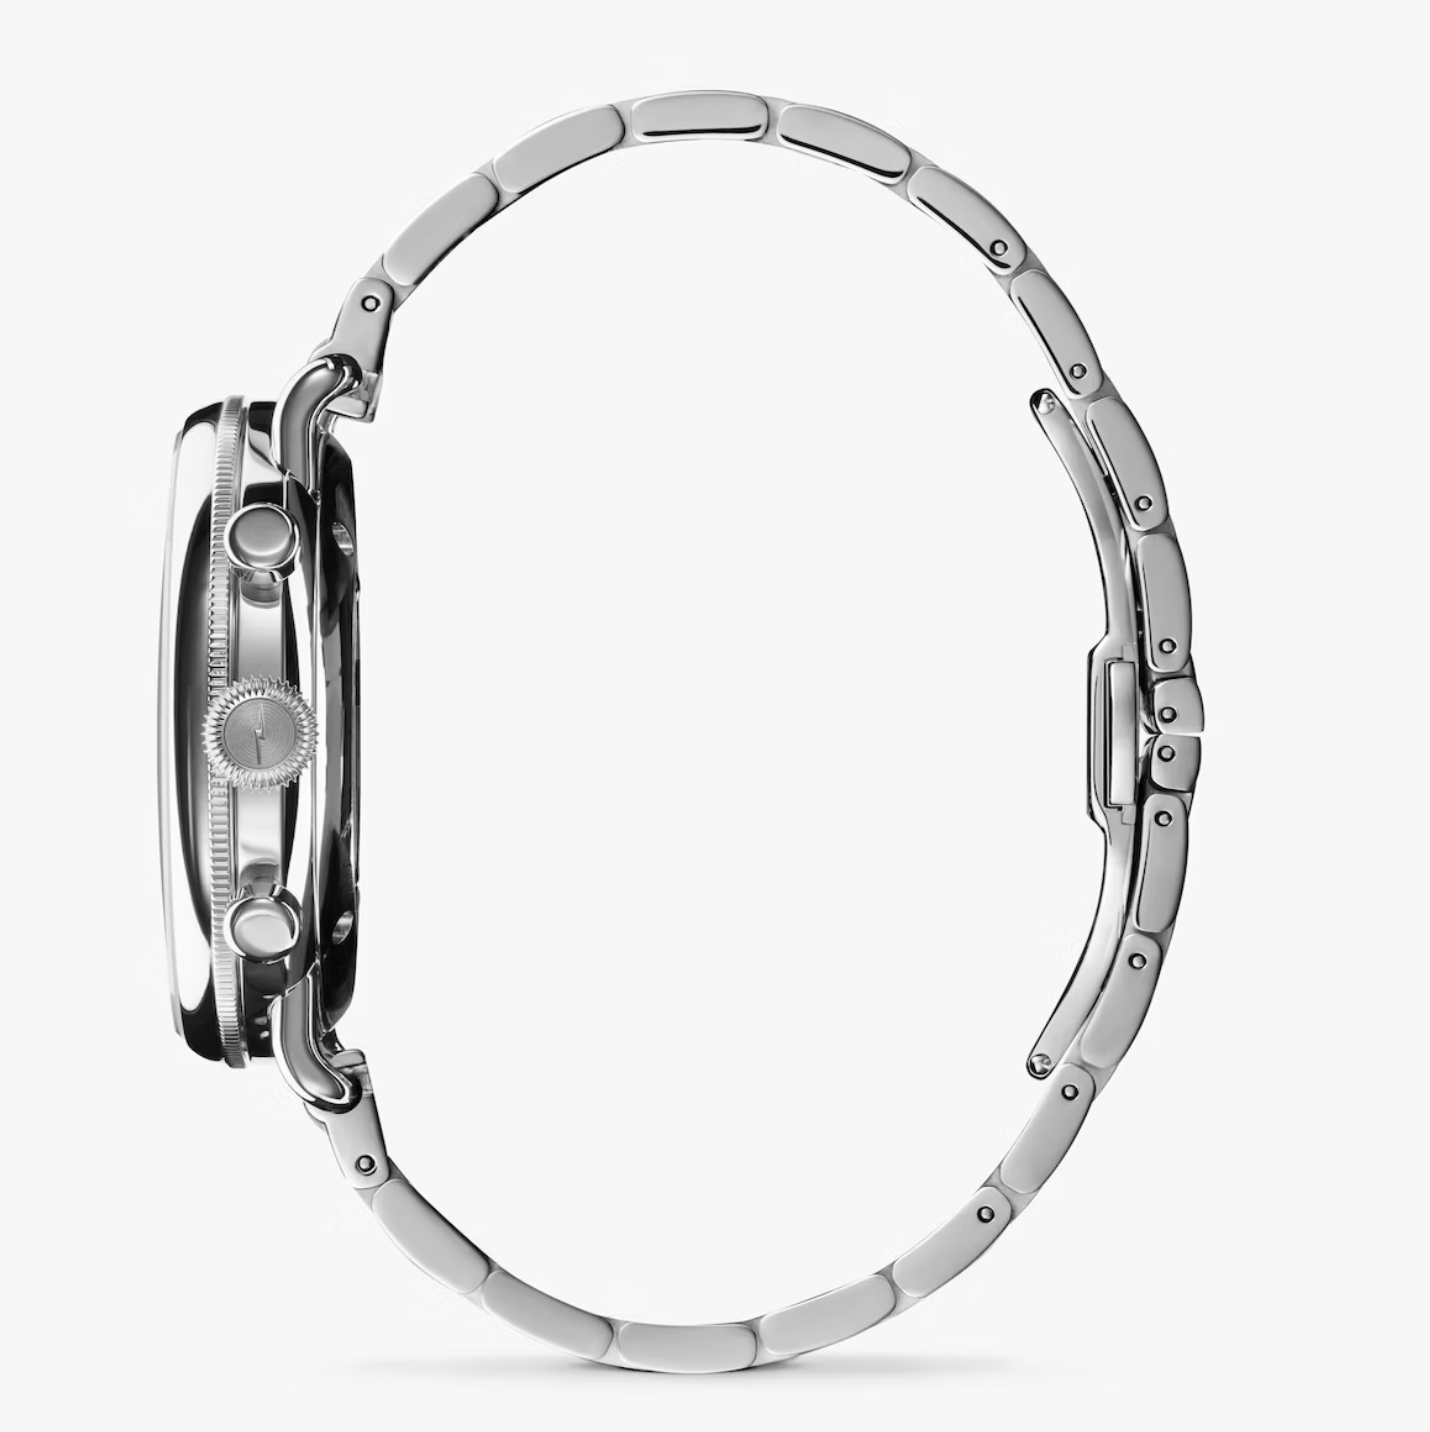 Shinola - Canfield Chrono 43mm Watch - Silver Bracelet